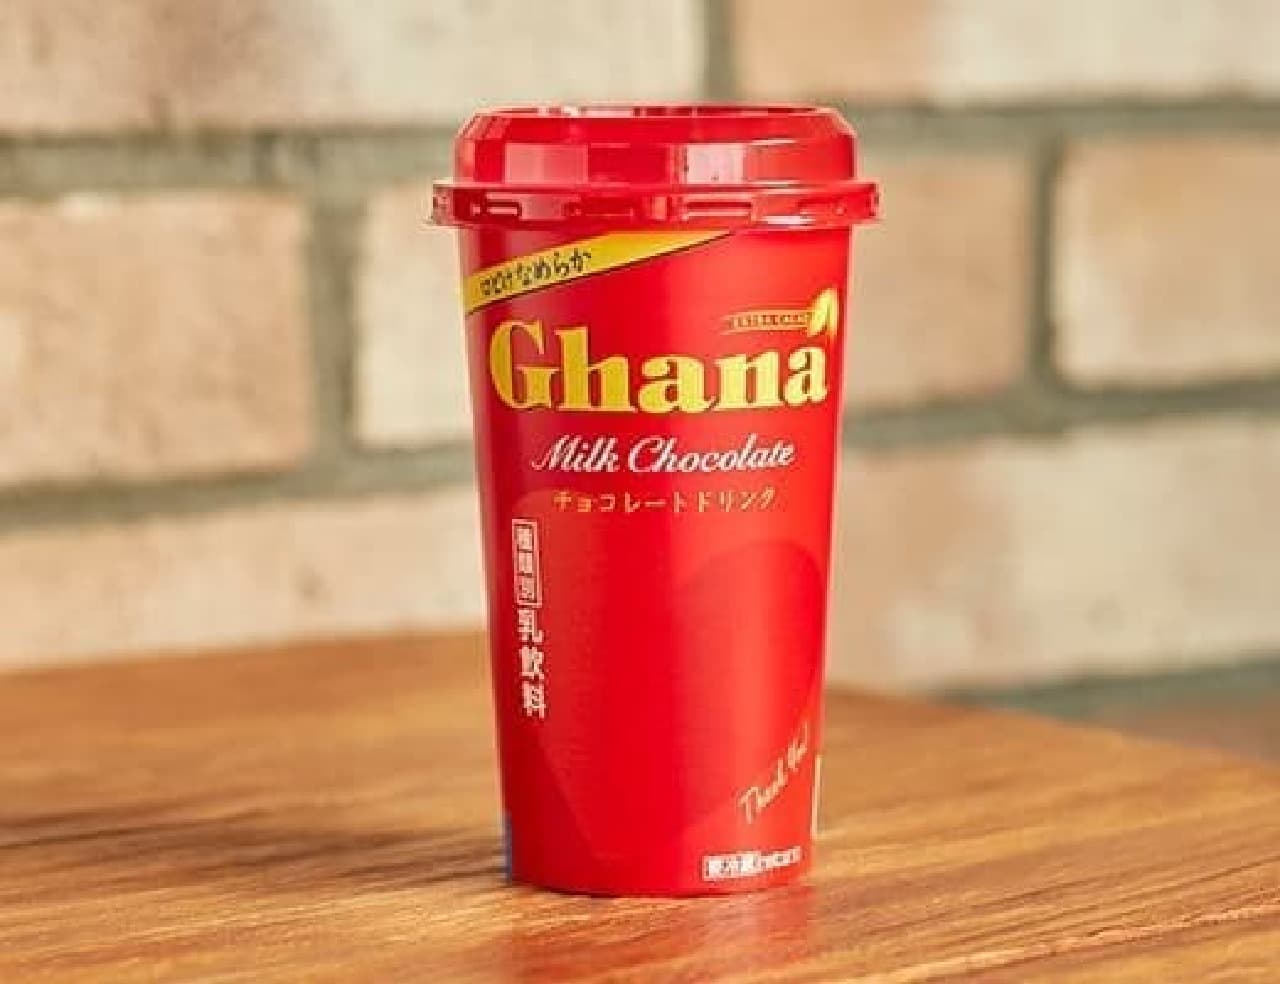 Ghana milk chocolate drink